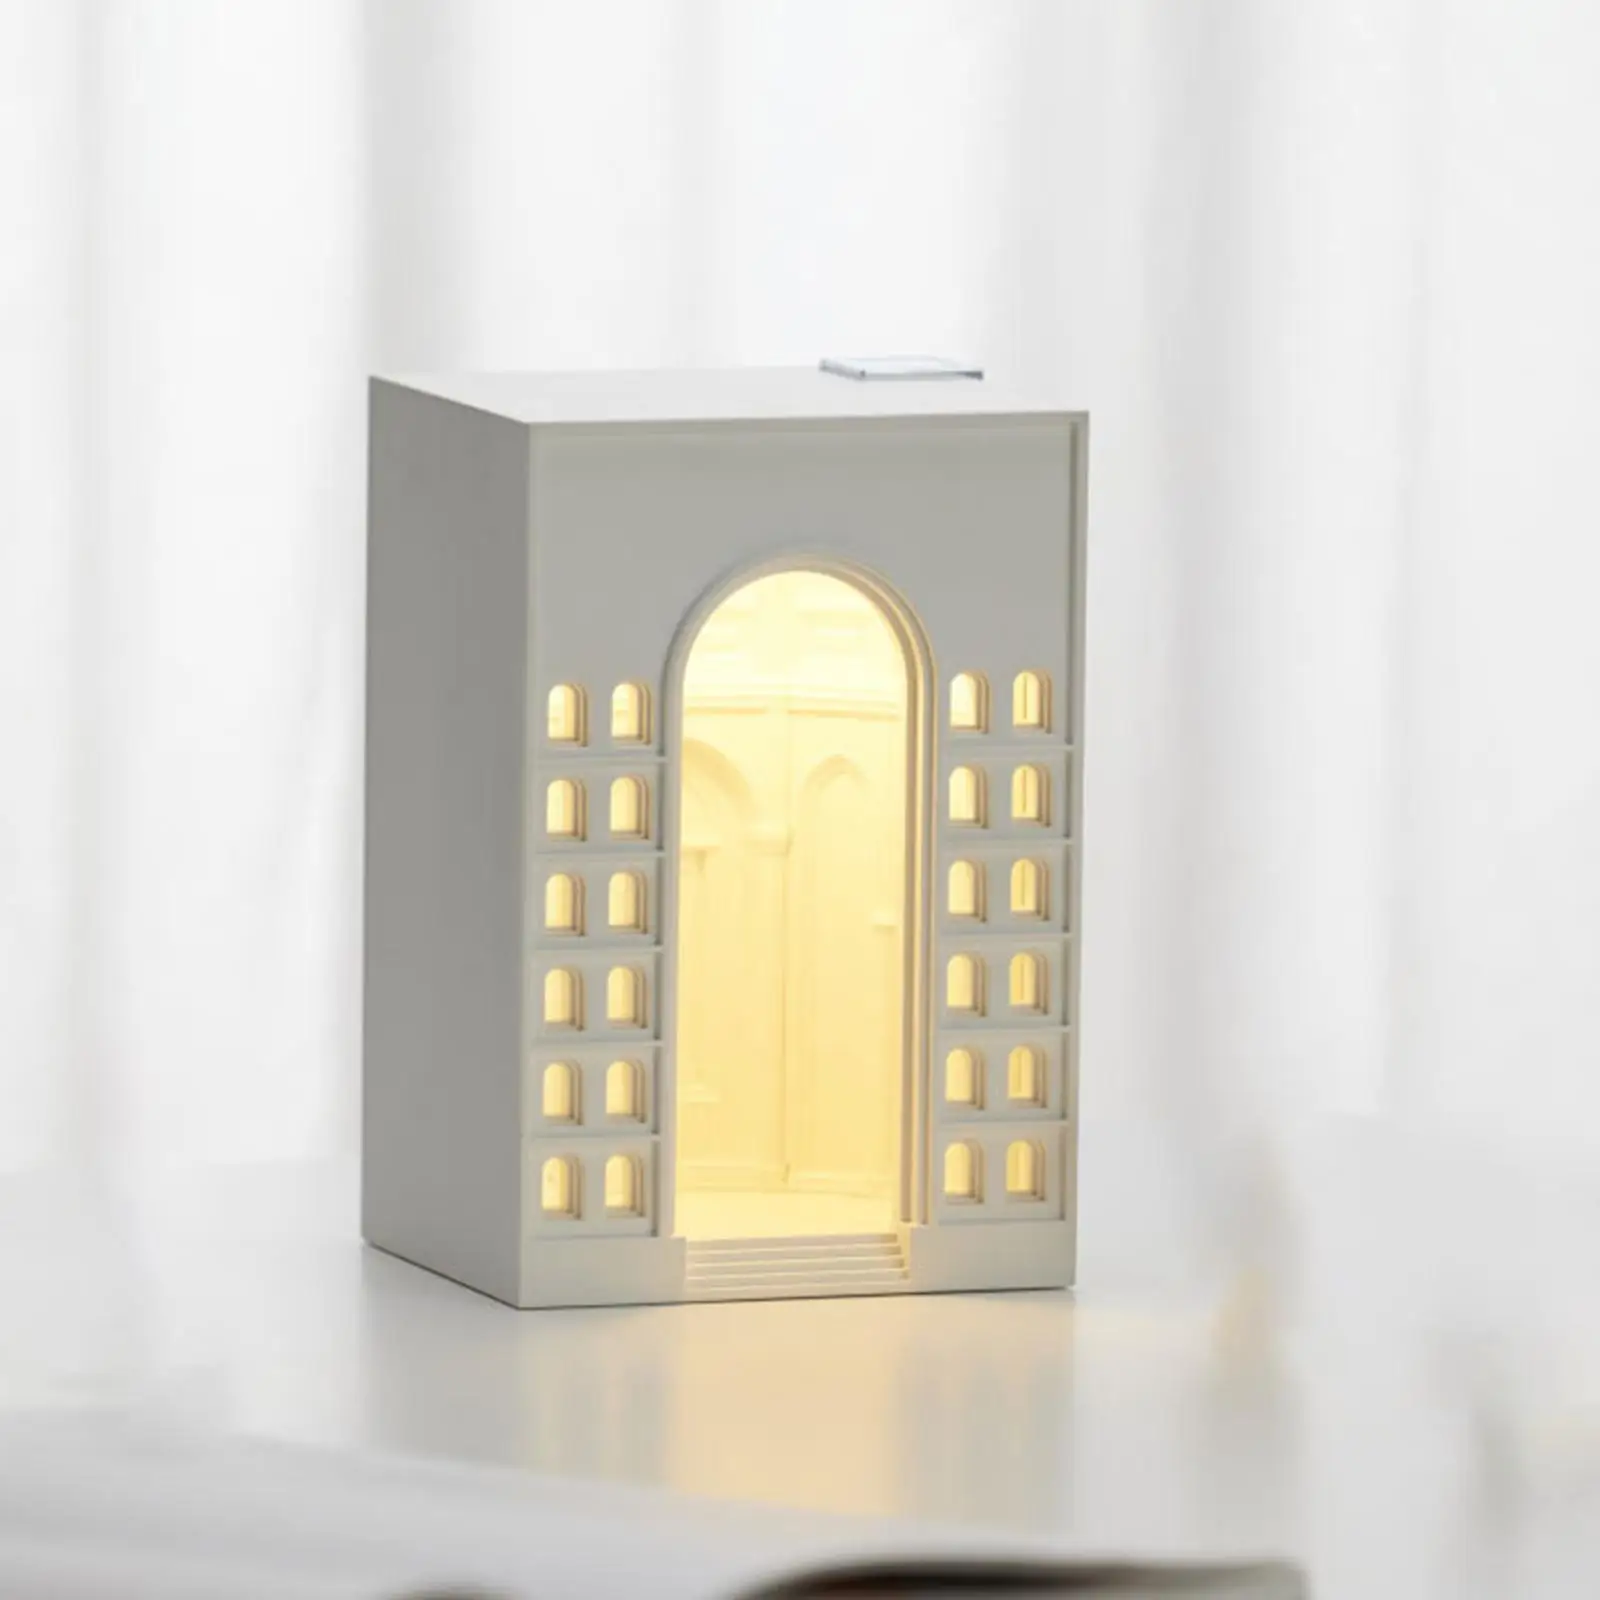 LED Night Light Dimmable Lighting Bedside Table Lamp for Living Room Reading